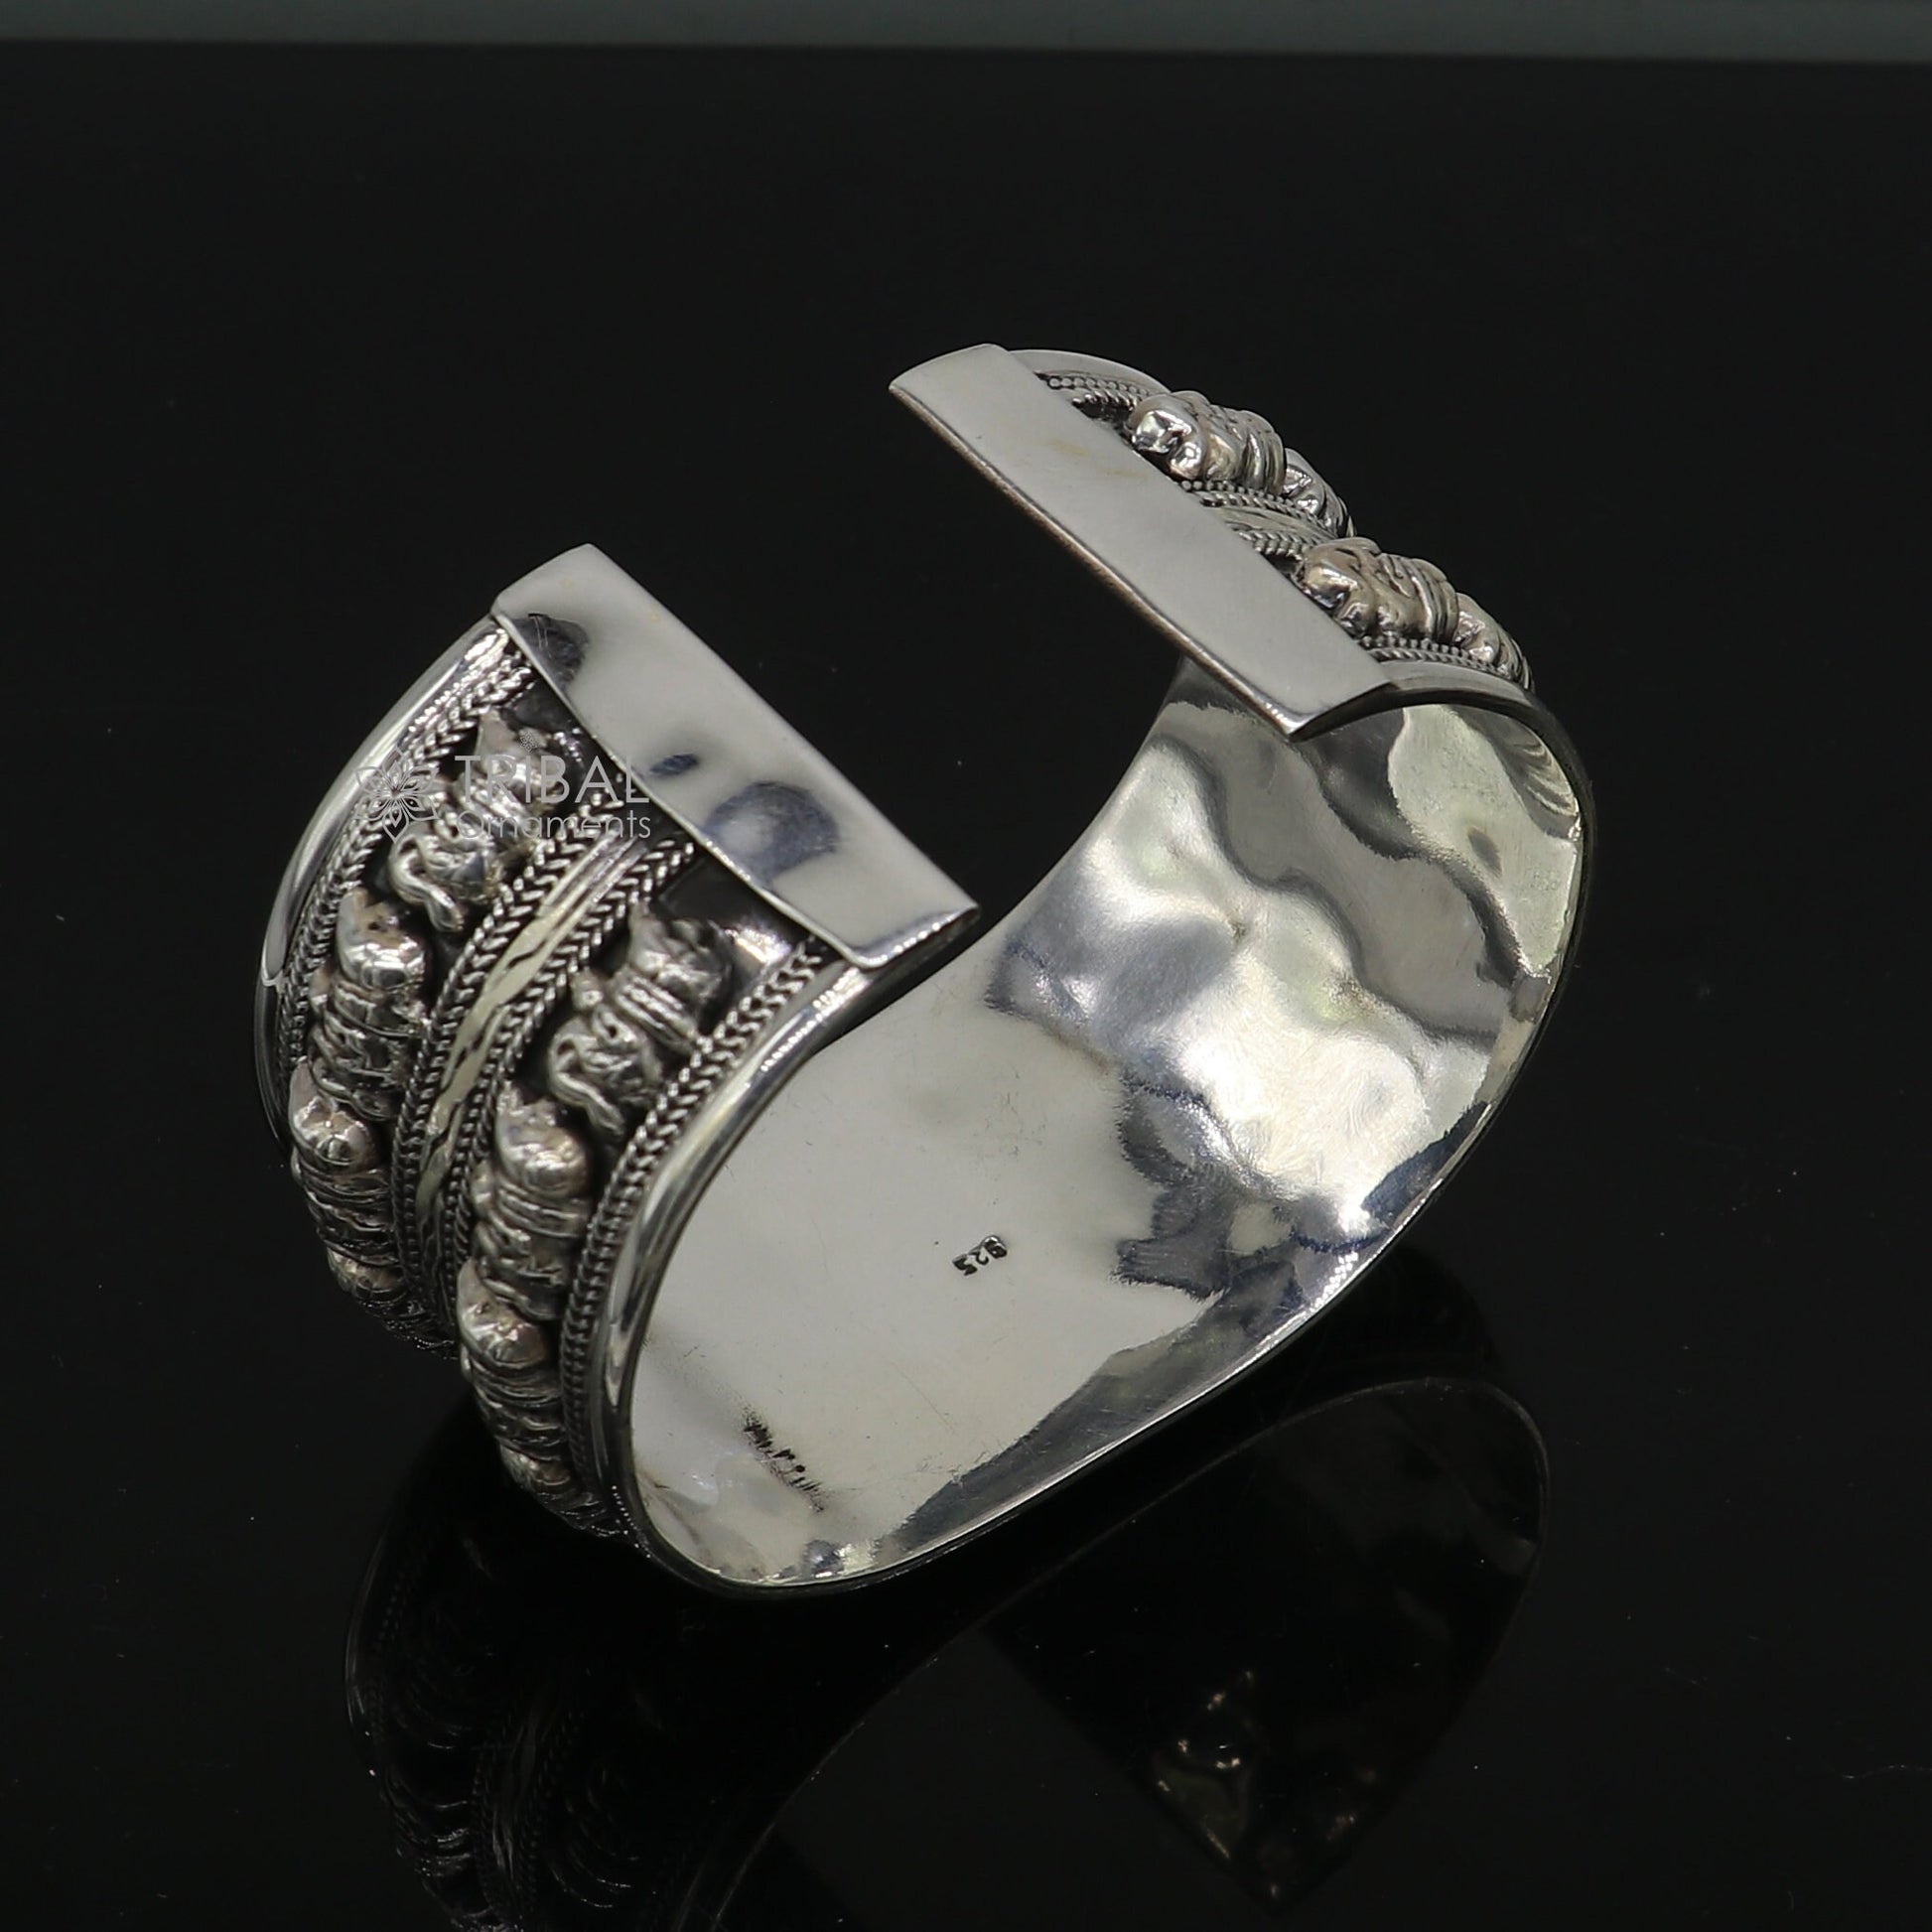 925 sterling silver handmade adjustable Elephant design cuff bangle bracelet  CUFF224 - TRIBAL ORNAMENTS